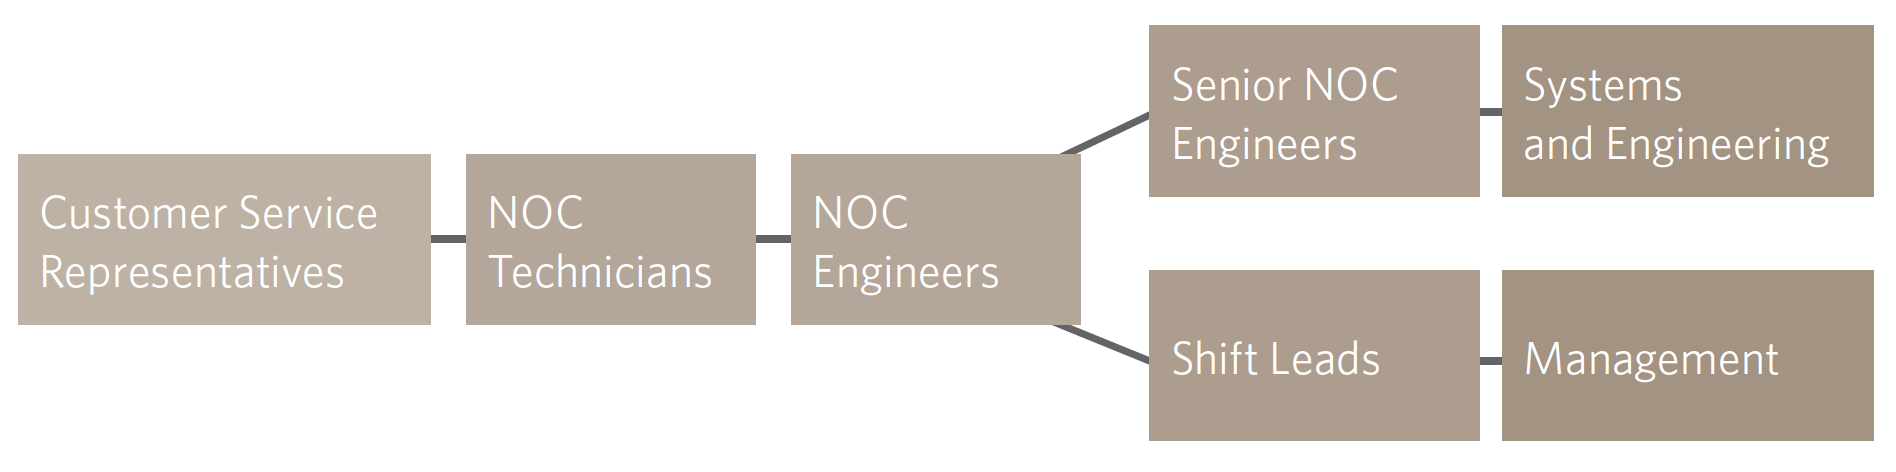 skills based noc structure figure